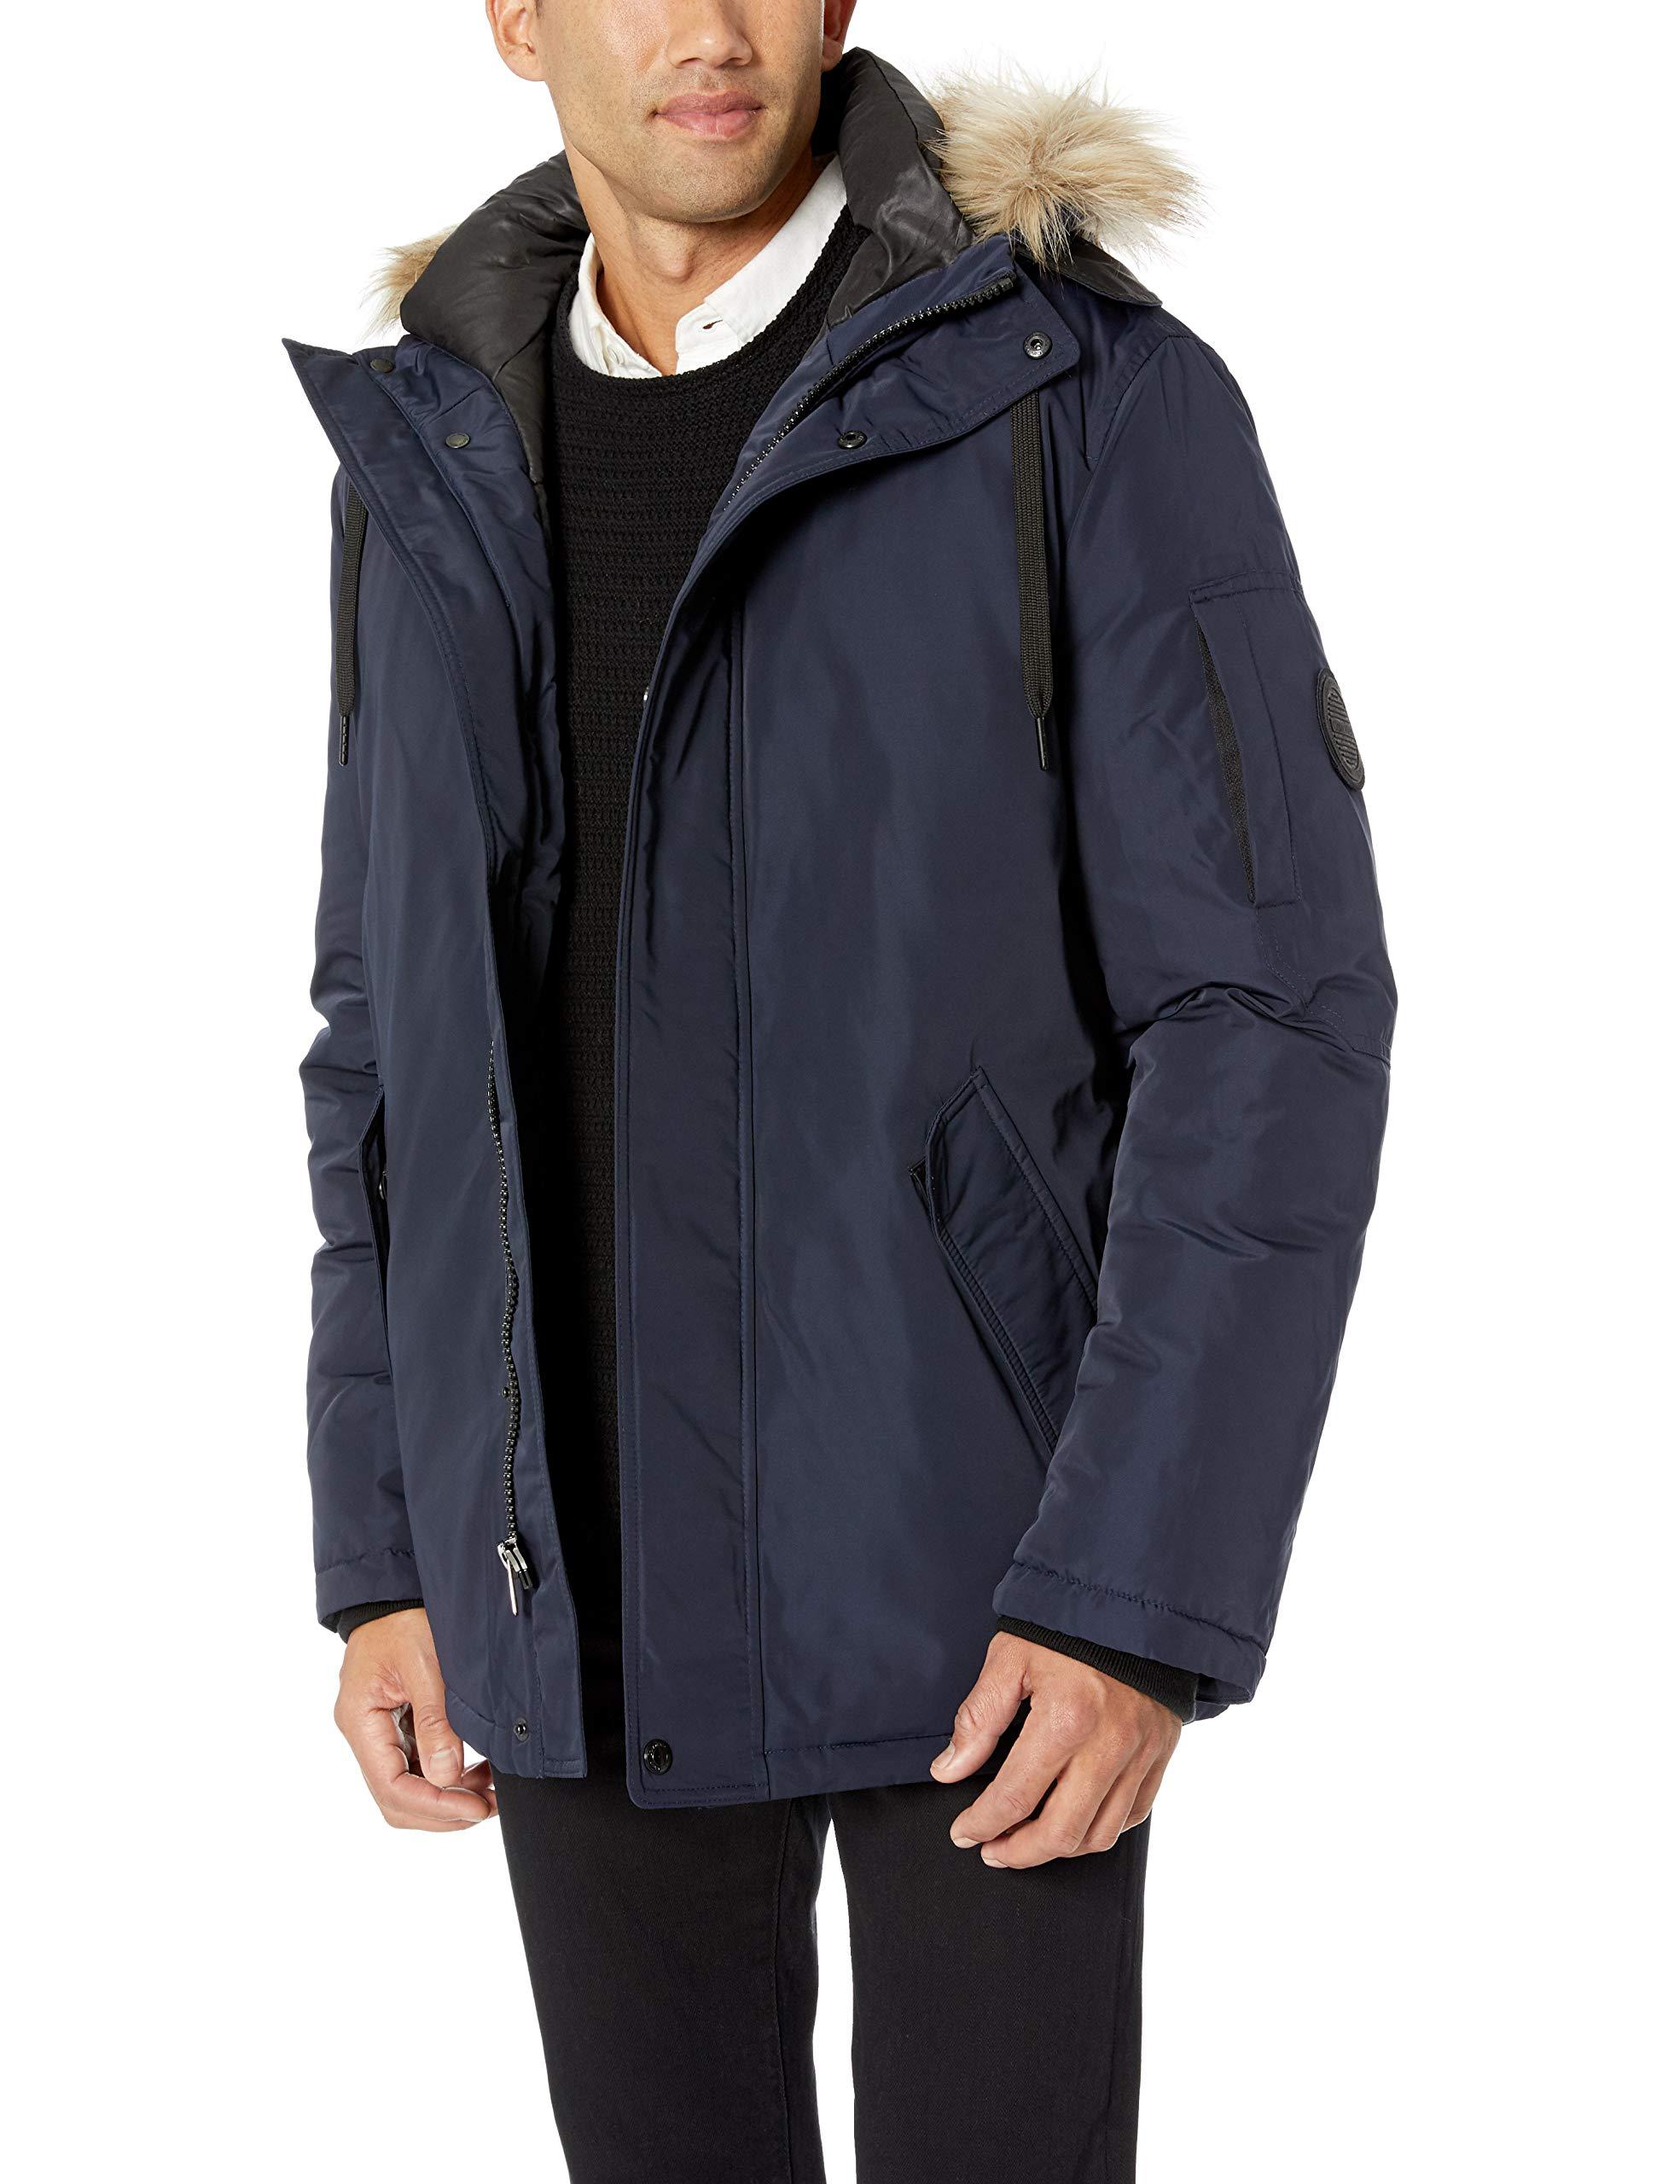 Calvin Klein Parka Jacket With Faux Fur Logo Hood in Blue for Men - Lyst